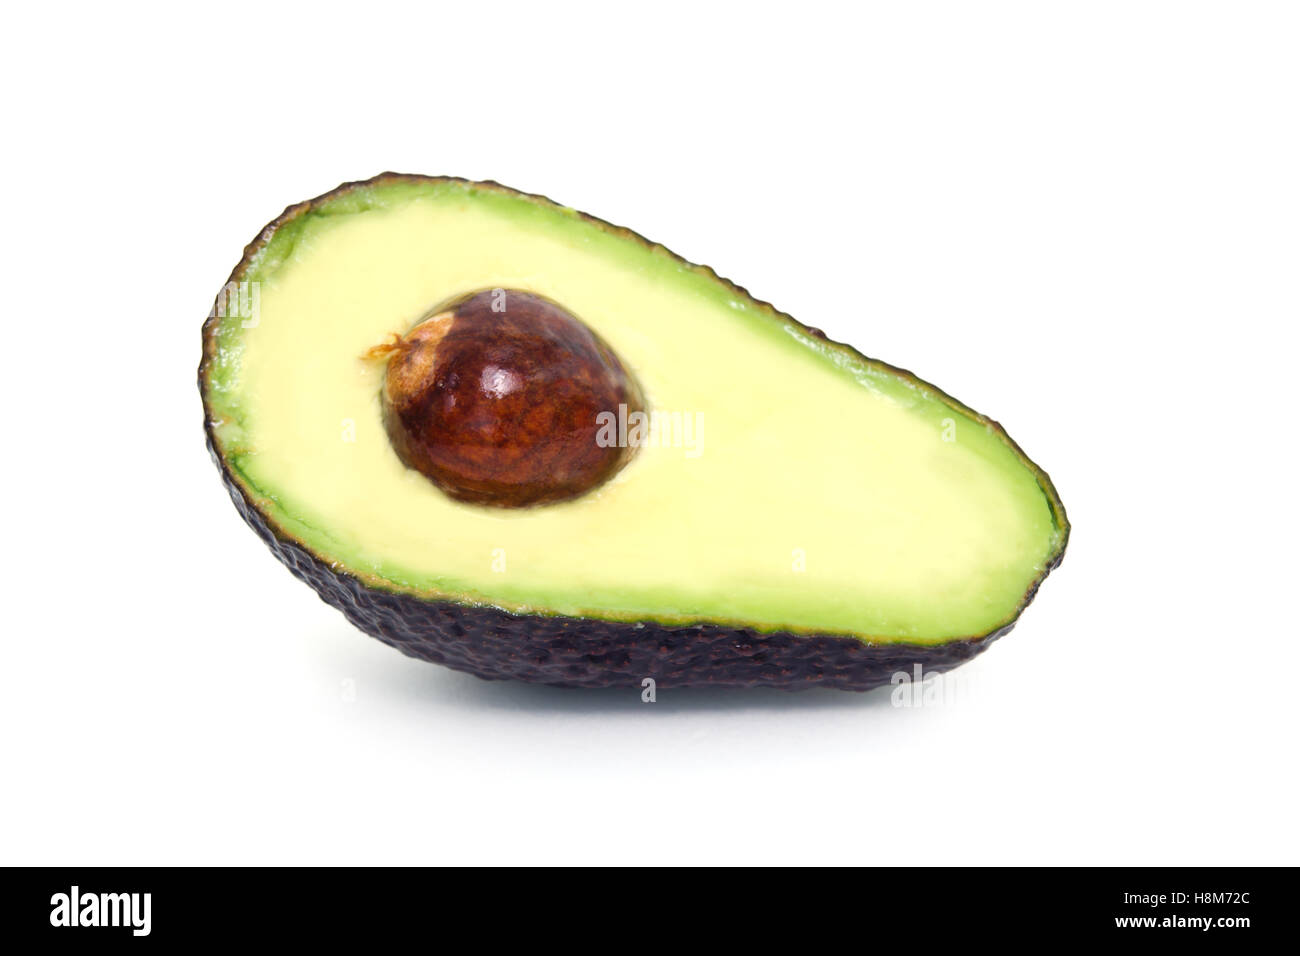 Avocado (auch benannt als Persea Americana, Lauraceae Avocado, Alligator Pear, criollo Obst, Aguacate in Spanisch, Abacate in Protu Stockfoto